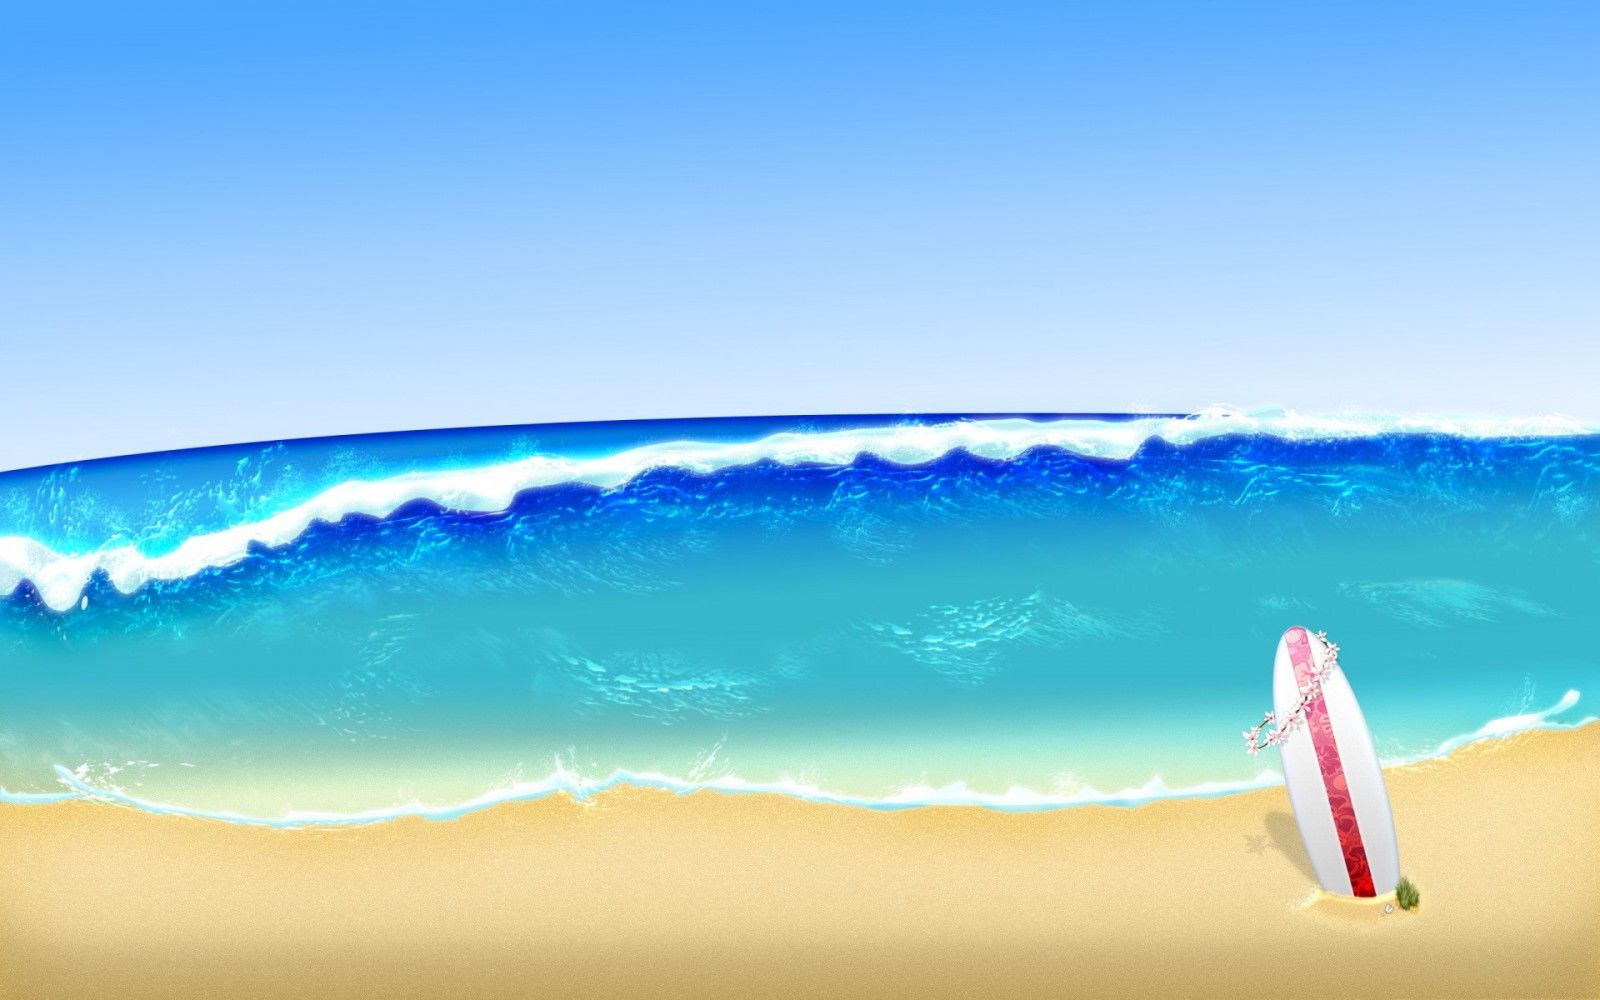 Wallpaper, sea, sand, sky, artwork, beach, blue, surfboards, waves, horizon, summer, rainbow, ocean, surfboard, computer wallpaper, atmosphere of earth, wind wave, surfing equipment and supplies 1920x1200